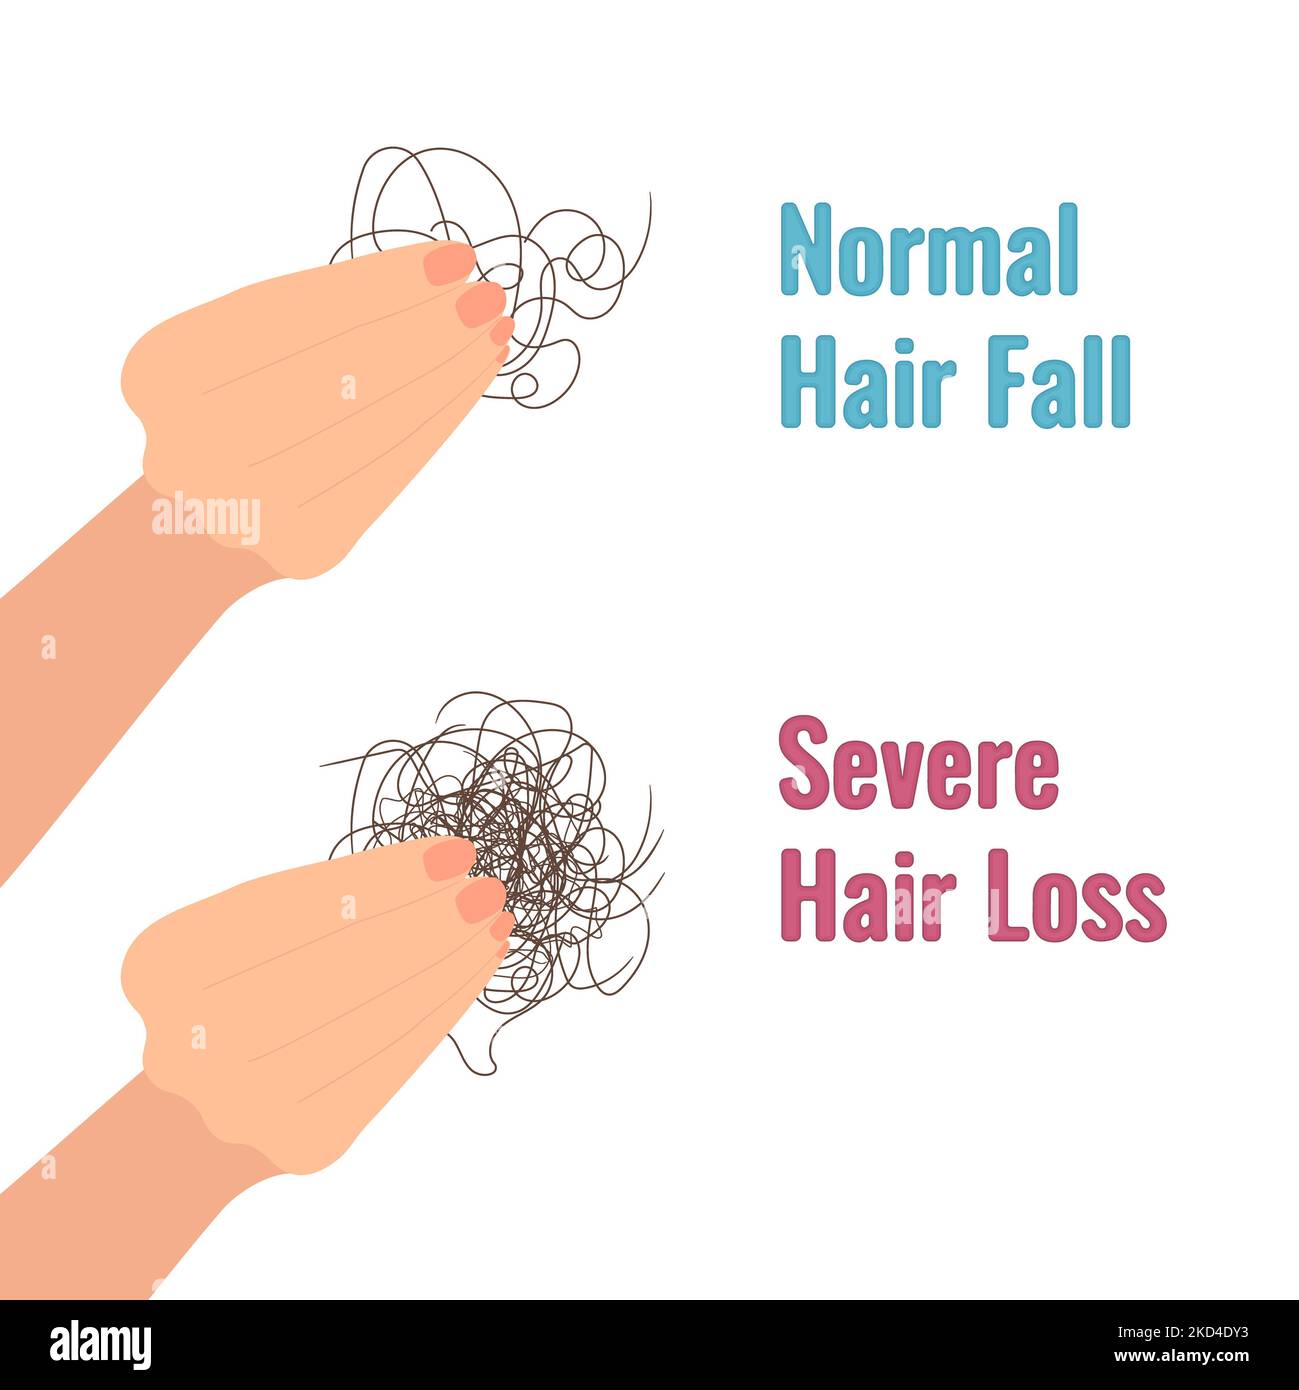 Hair shedding versus hair loss, conceptual illustration Stock Photo